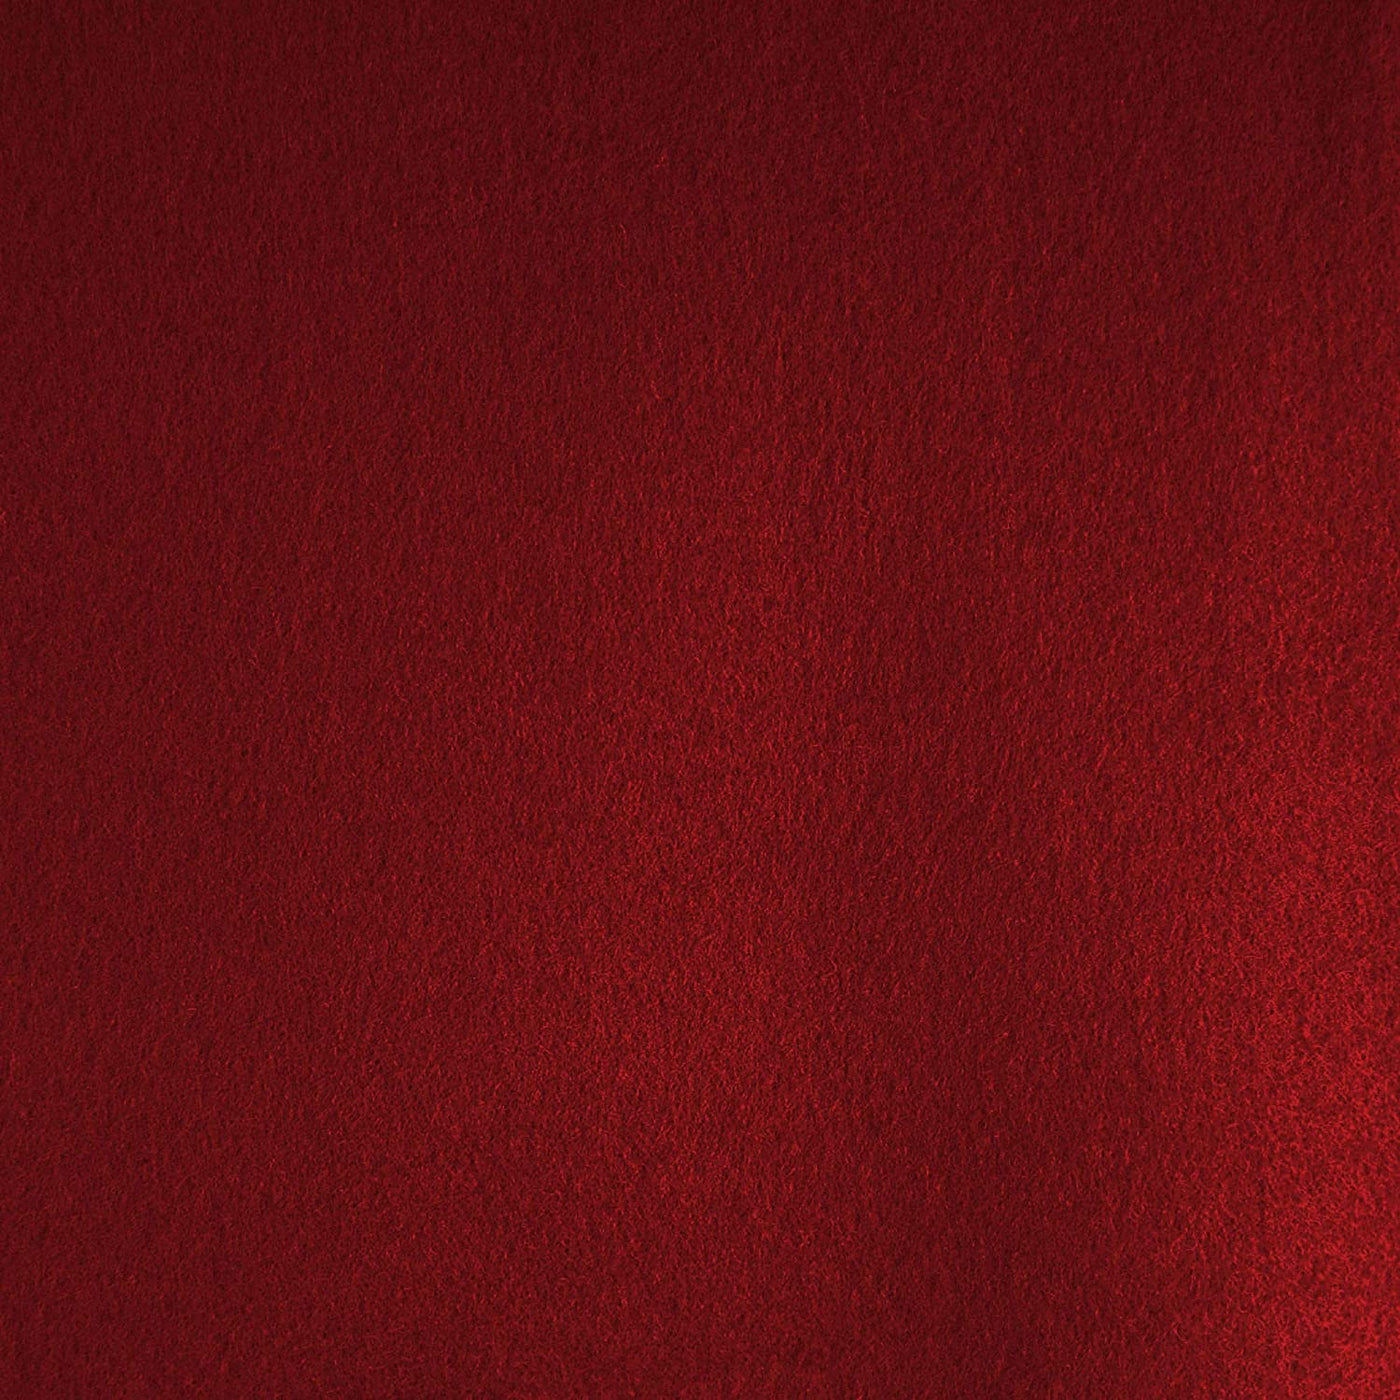 FabricLA | Acrylic Felt Craft Fabric by the Yard | 72" Inch Wide | 1.6mm Thick | Sewing, Cushion, Padding, and DIY, Arts & Crafts | Dark Red | FabricLA.com